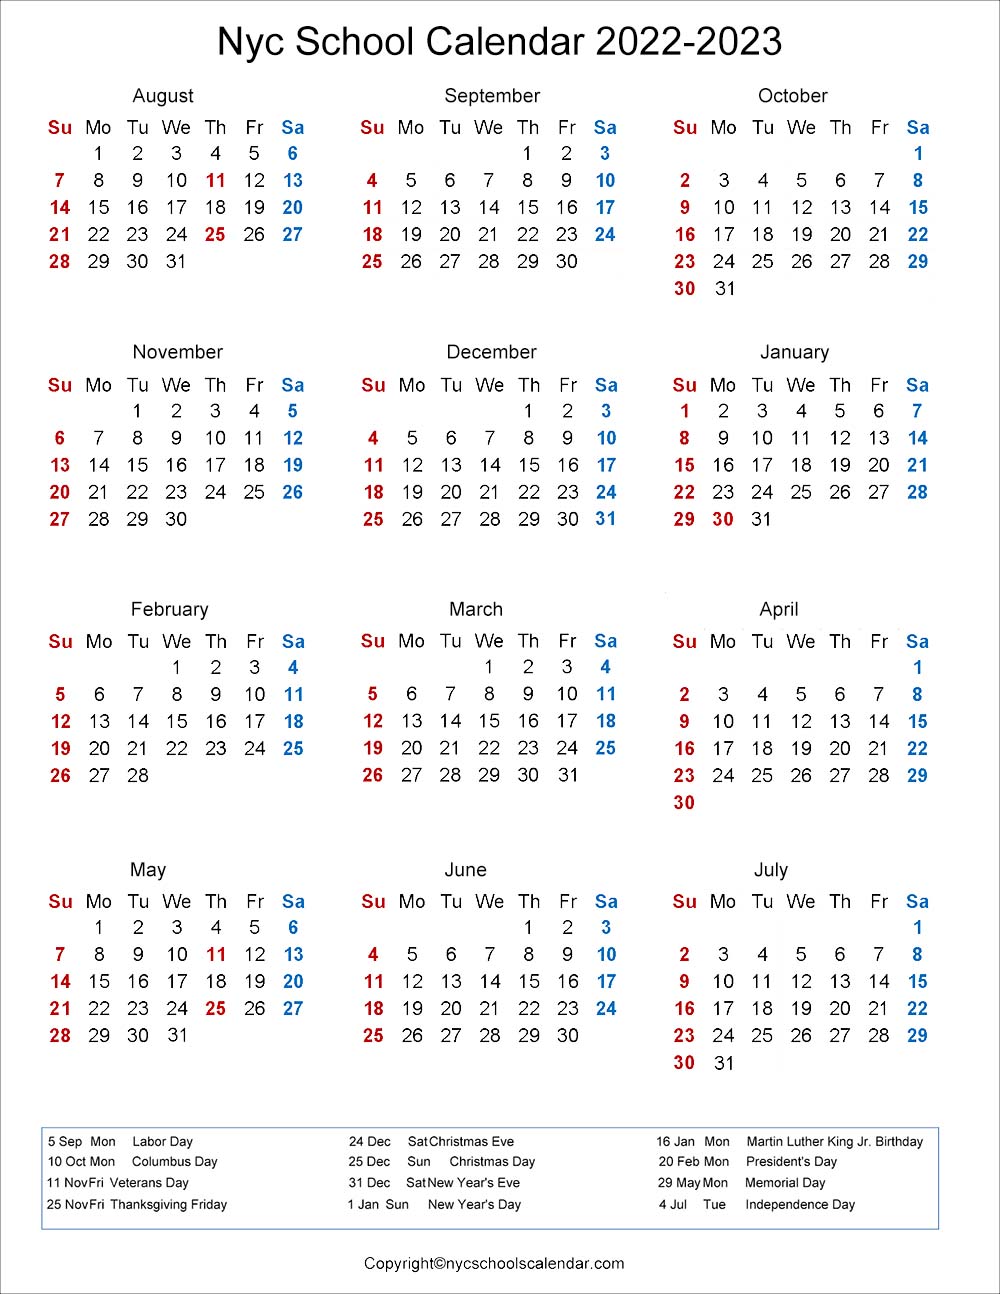 Doe Calendar 2022 2023 ❤️Nyc School Holidays Calendar 2022-2023 ✓